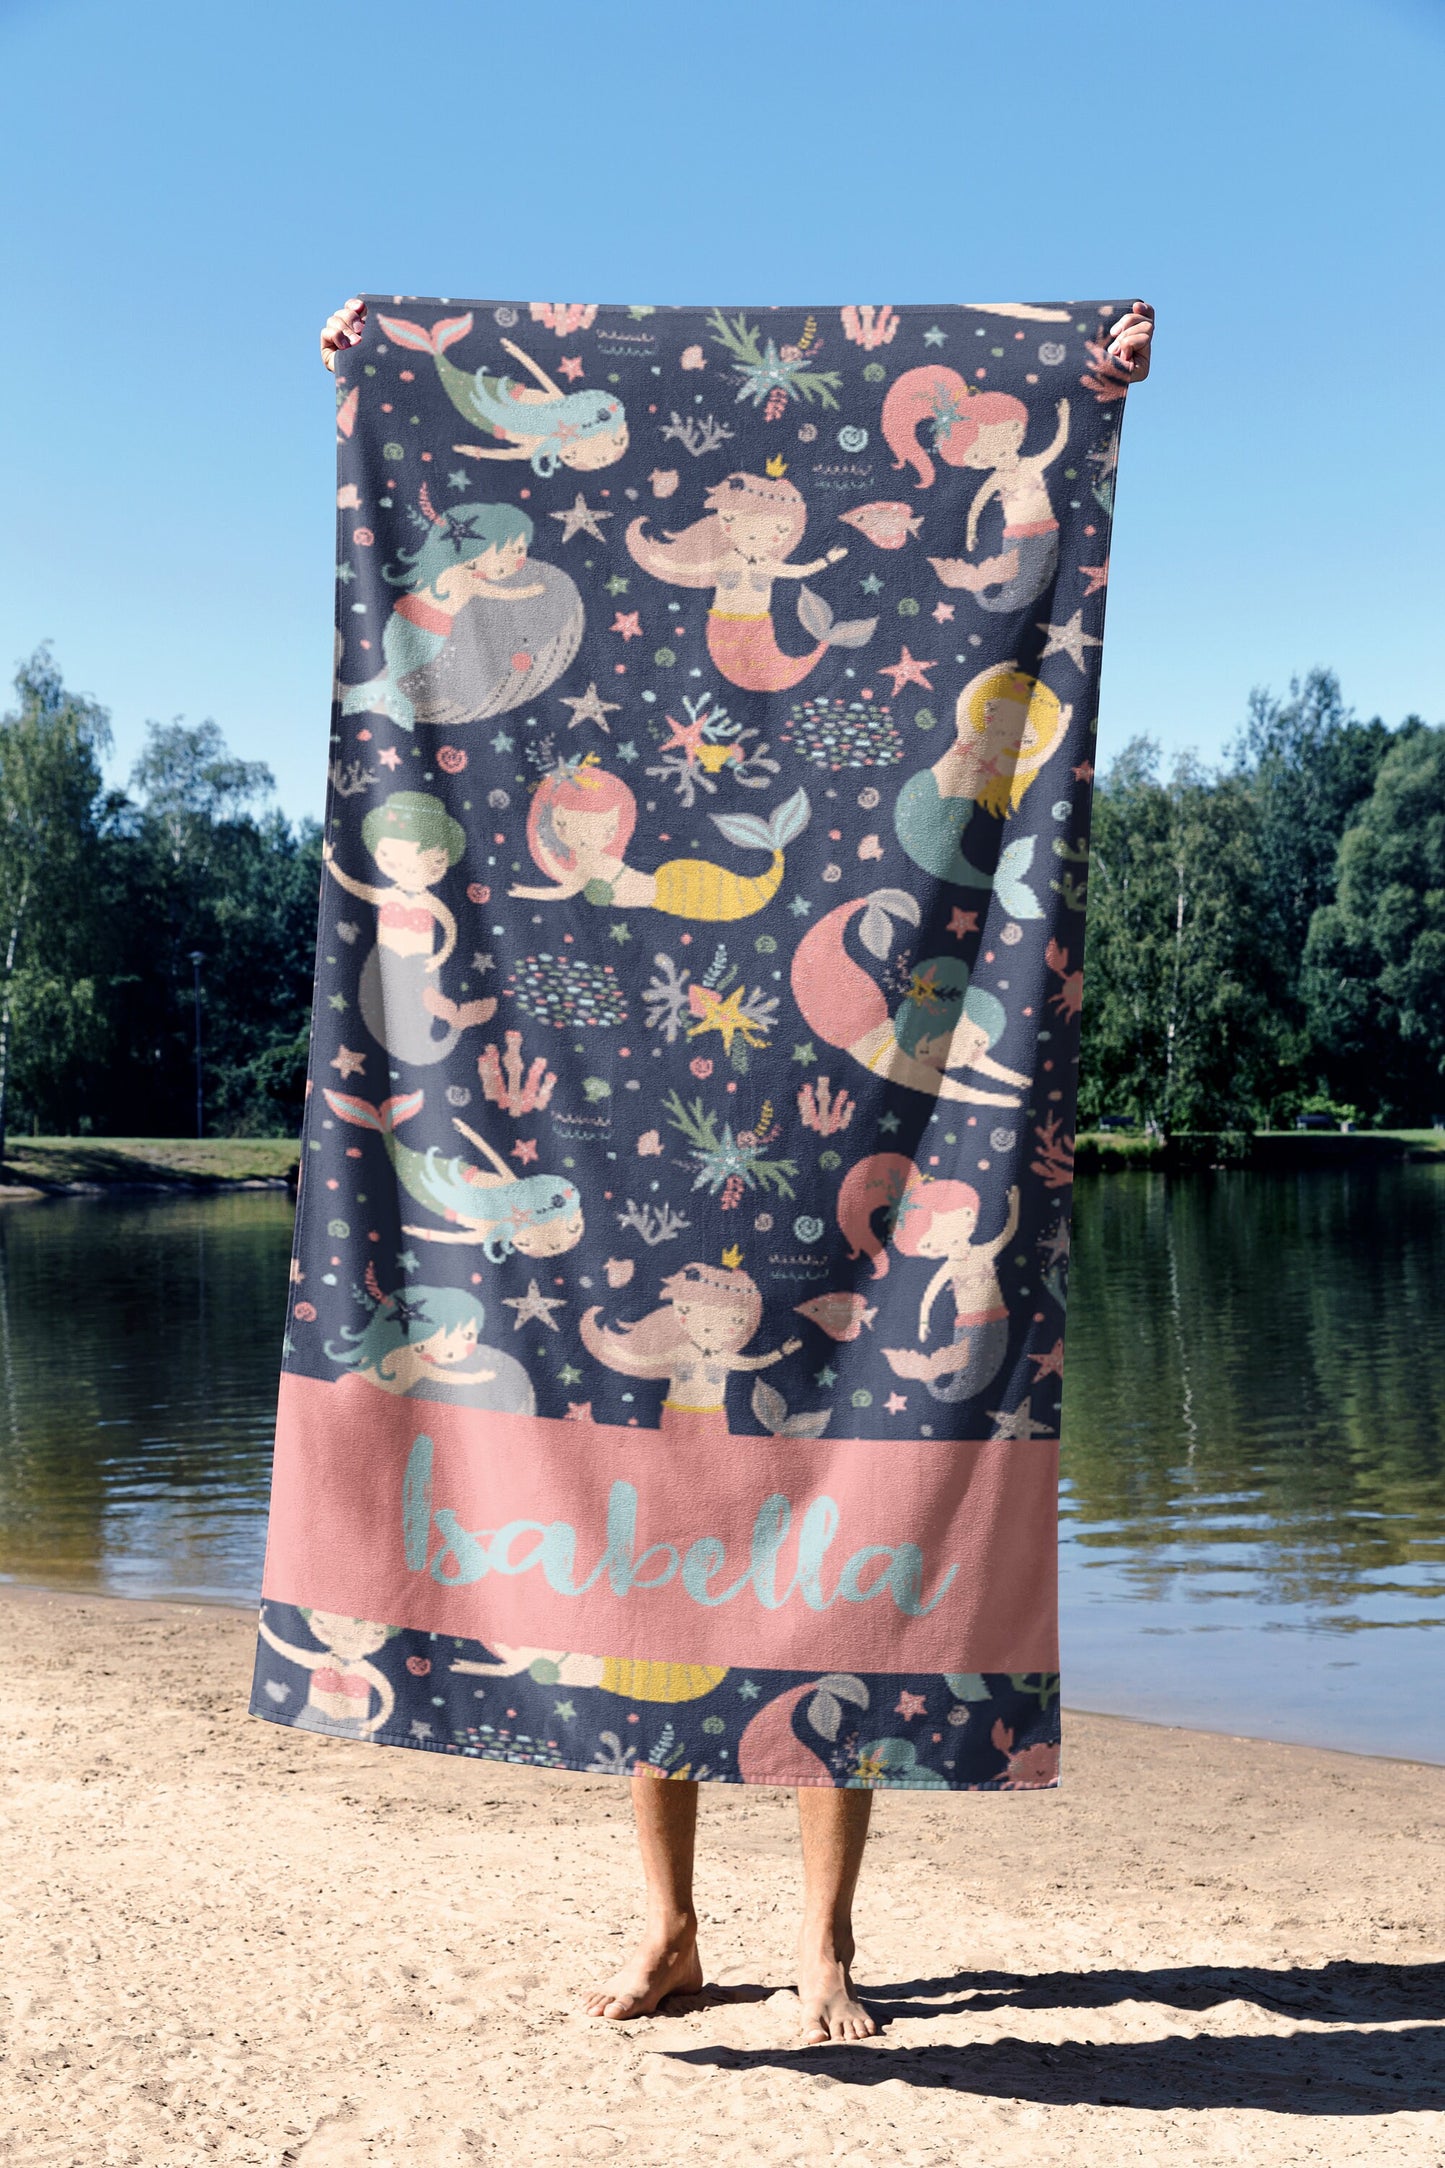 Mermaid Personalized Kids Beach & Pool Towel Custom Pool Towel Beach Towel With Name Outside Birthday Vacation Gift